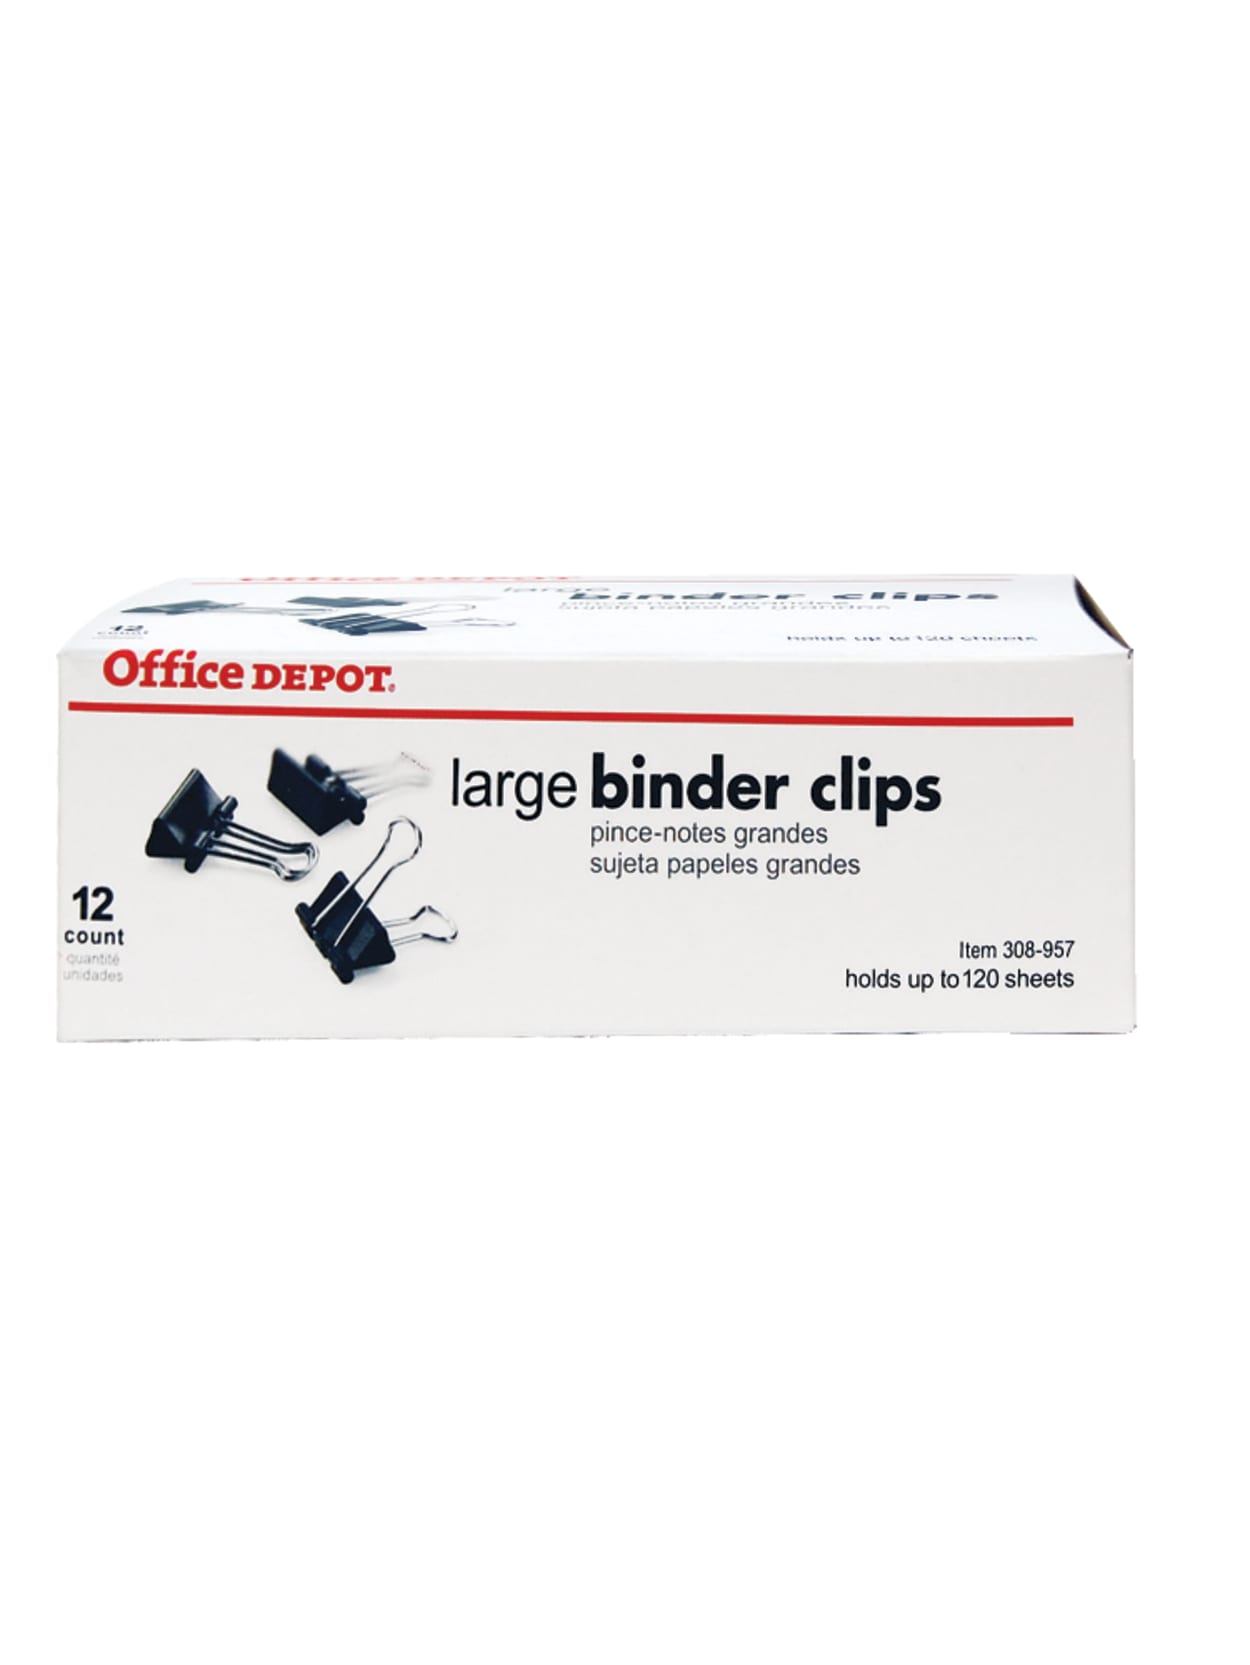 oversized binder clips